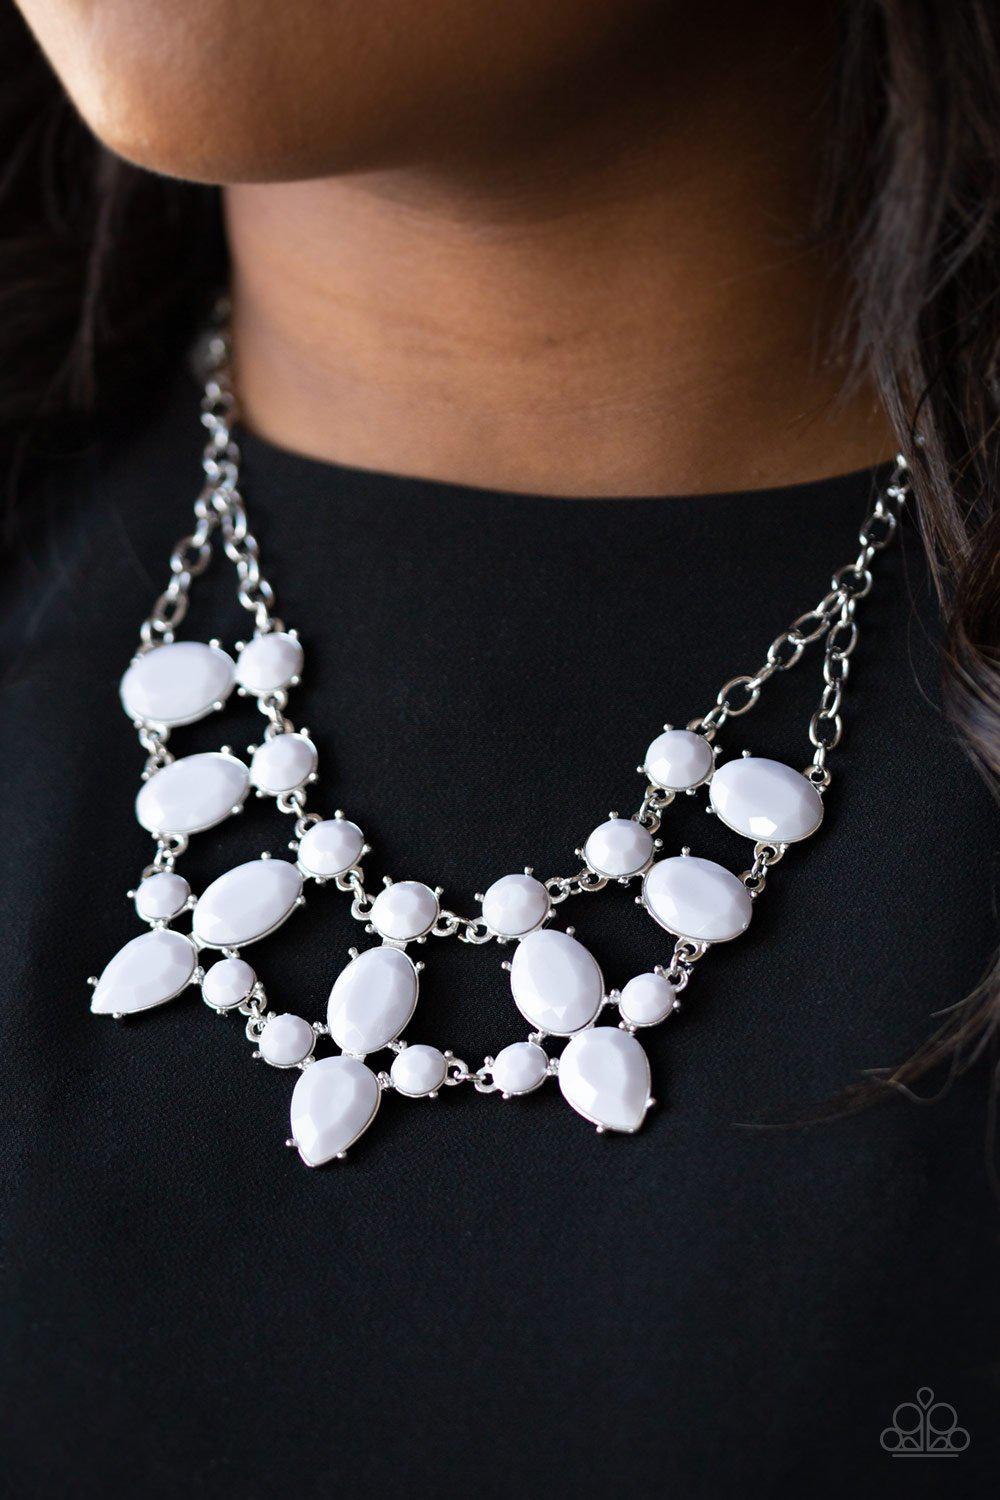 Goddess Glow Silver Necklace - Paparazzi Accessories - model -CarasShop.com - $5 Jewelry by Cara Jewels